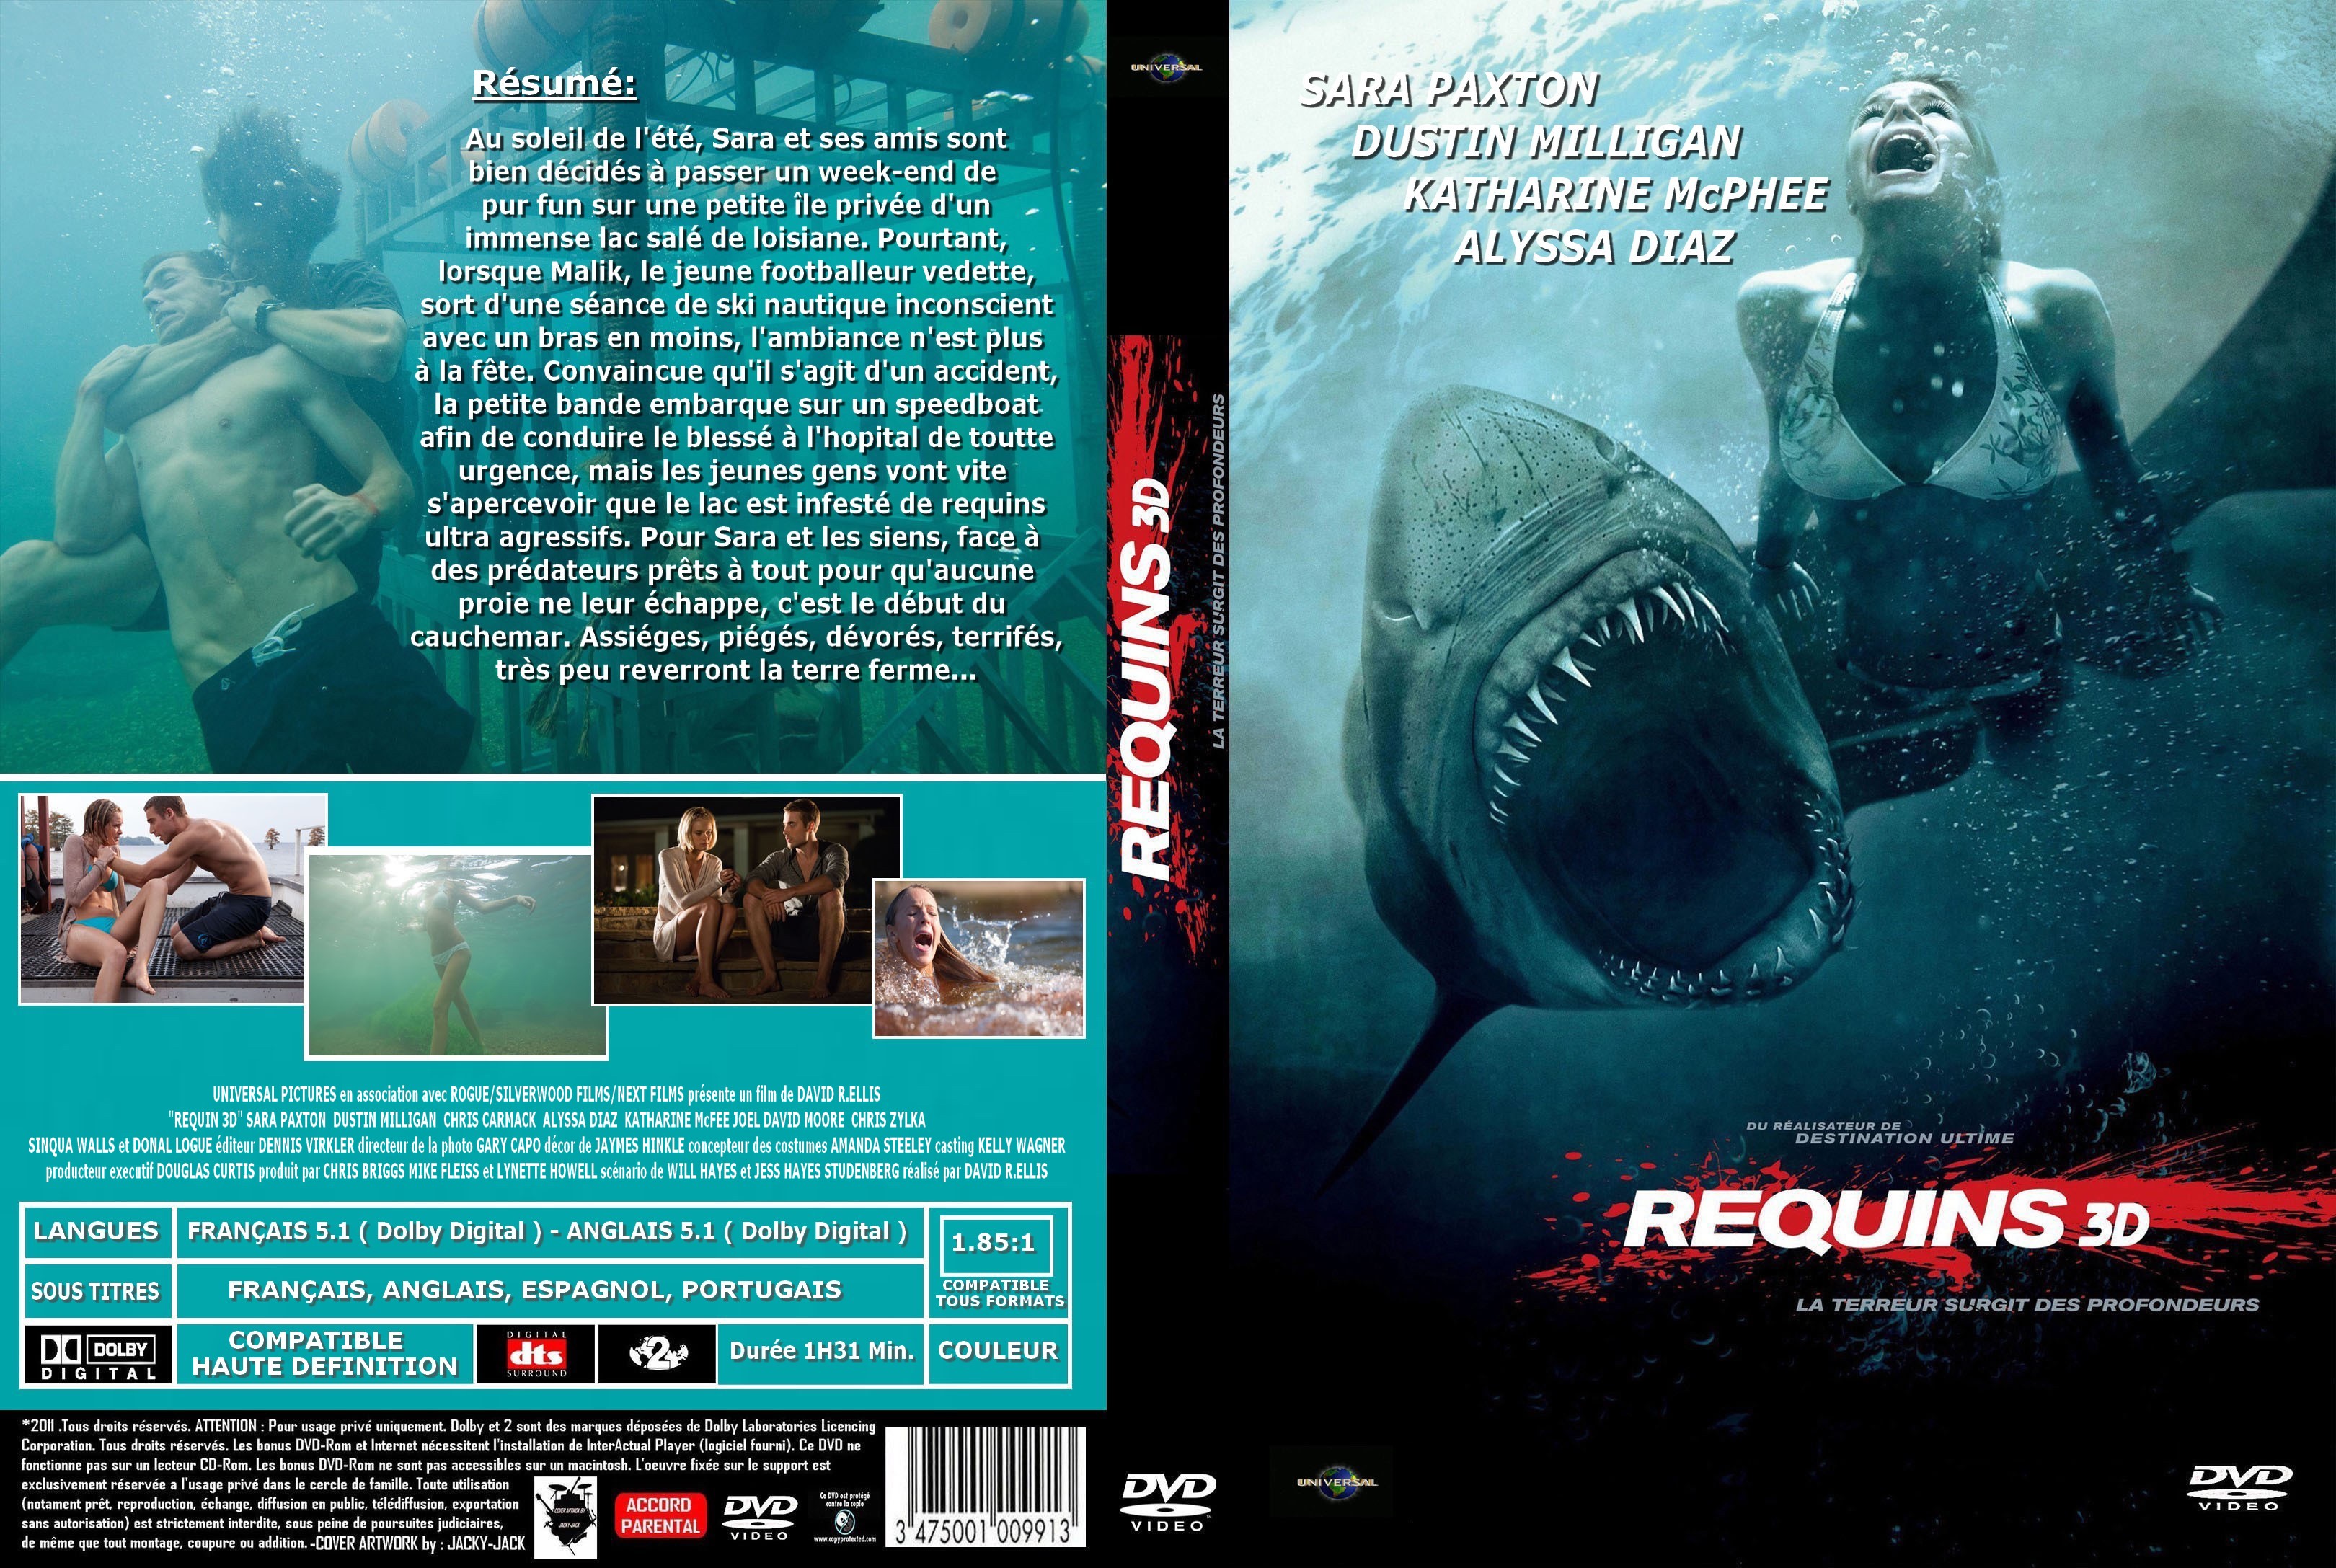 Jaquette DVD Requin 3D custom